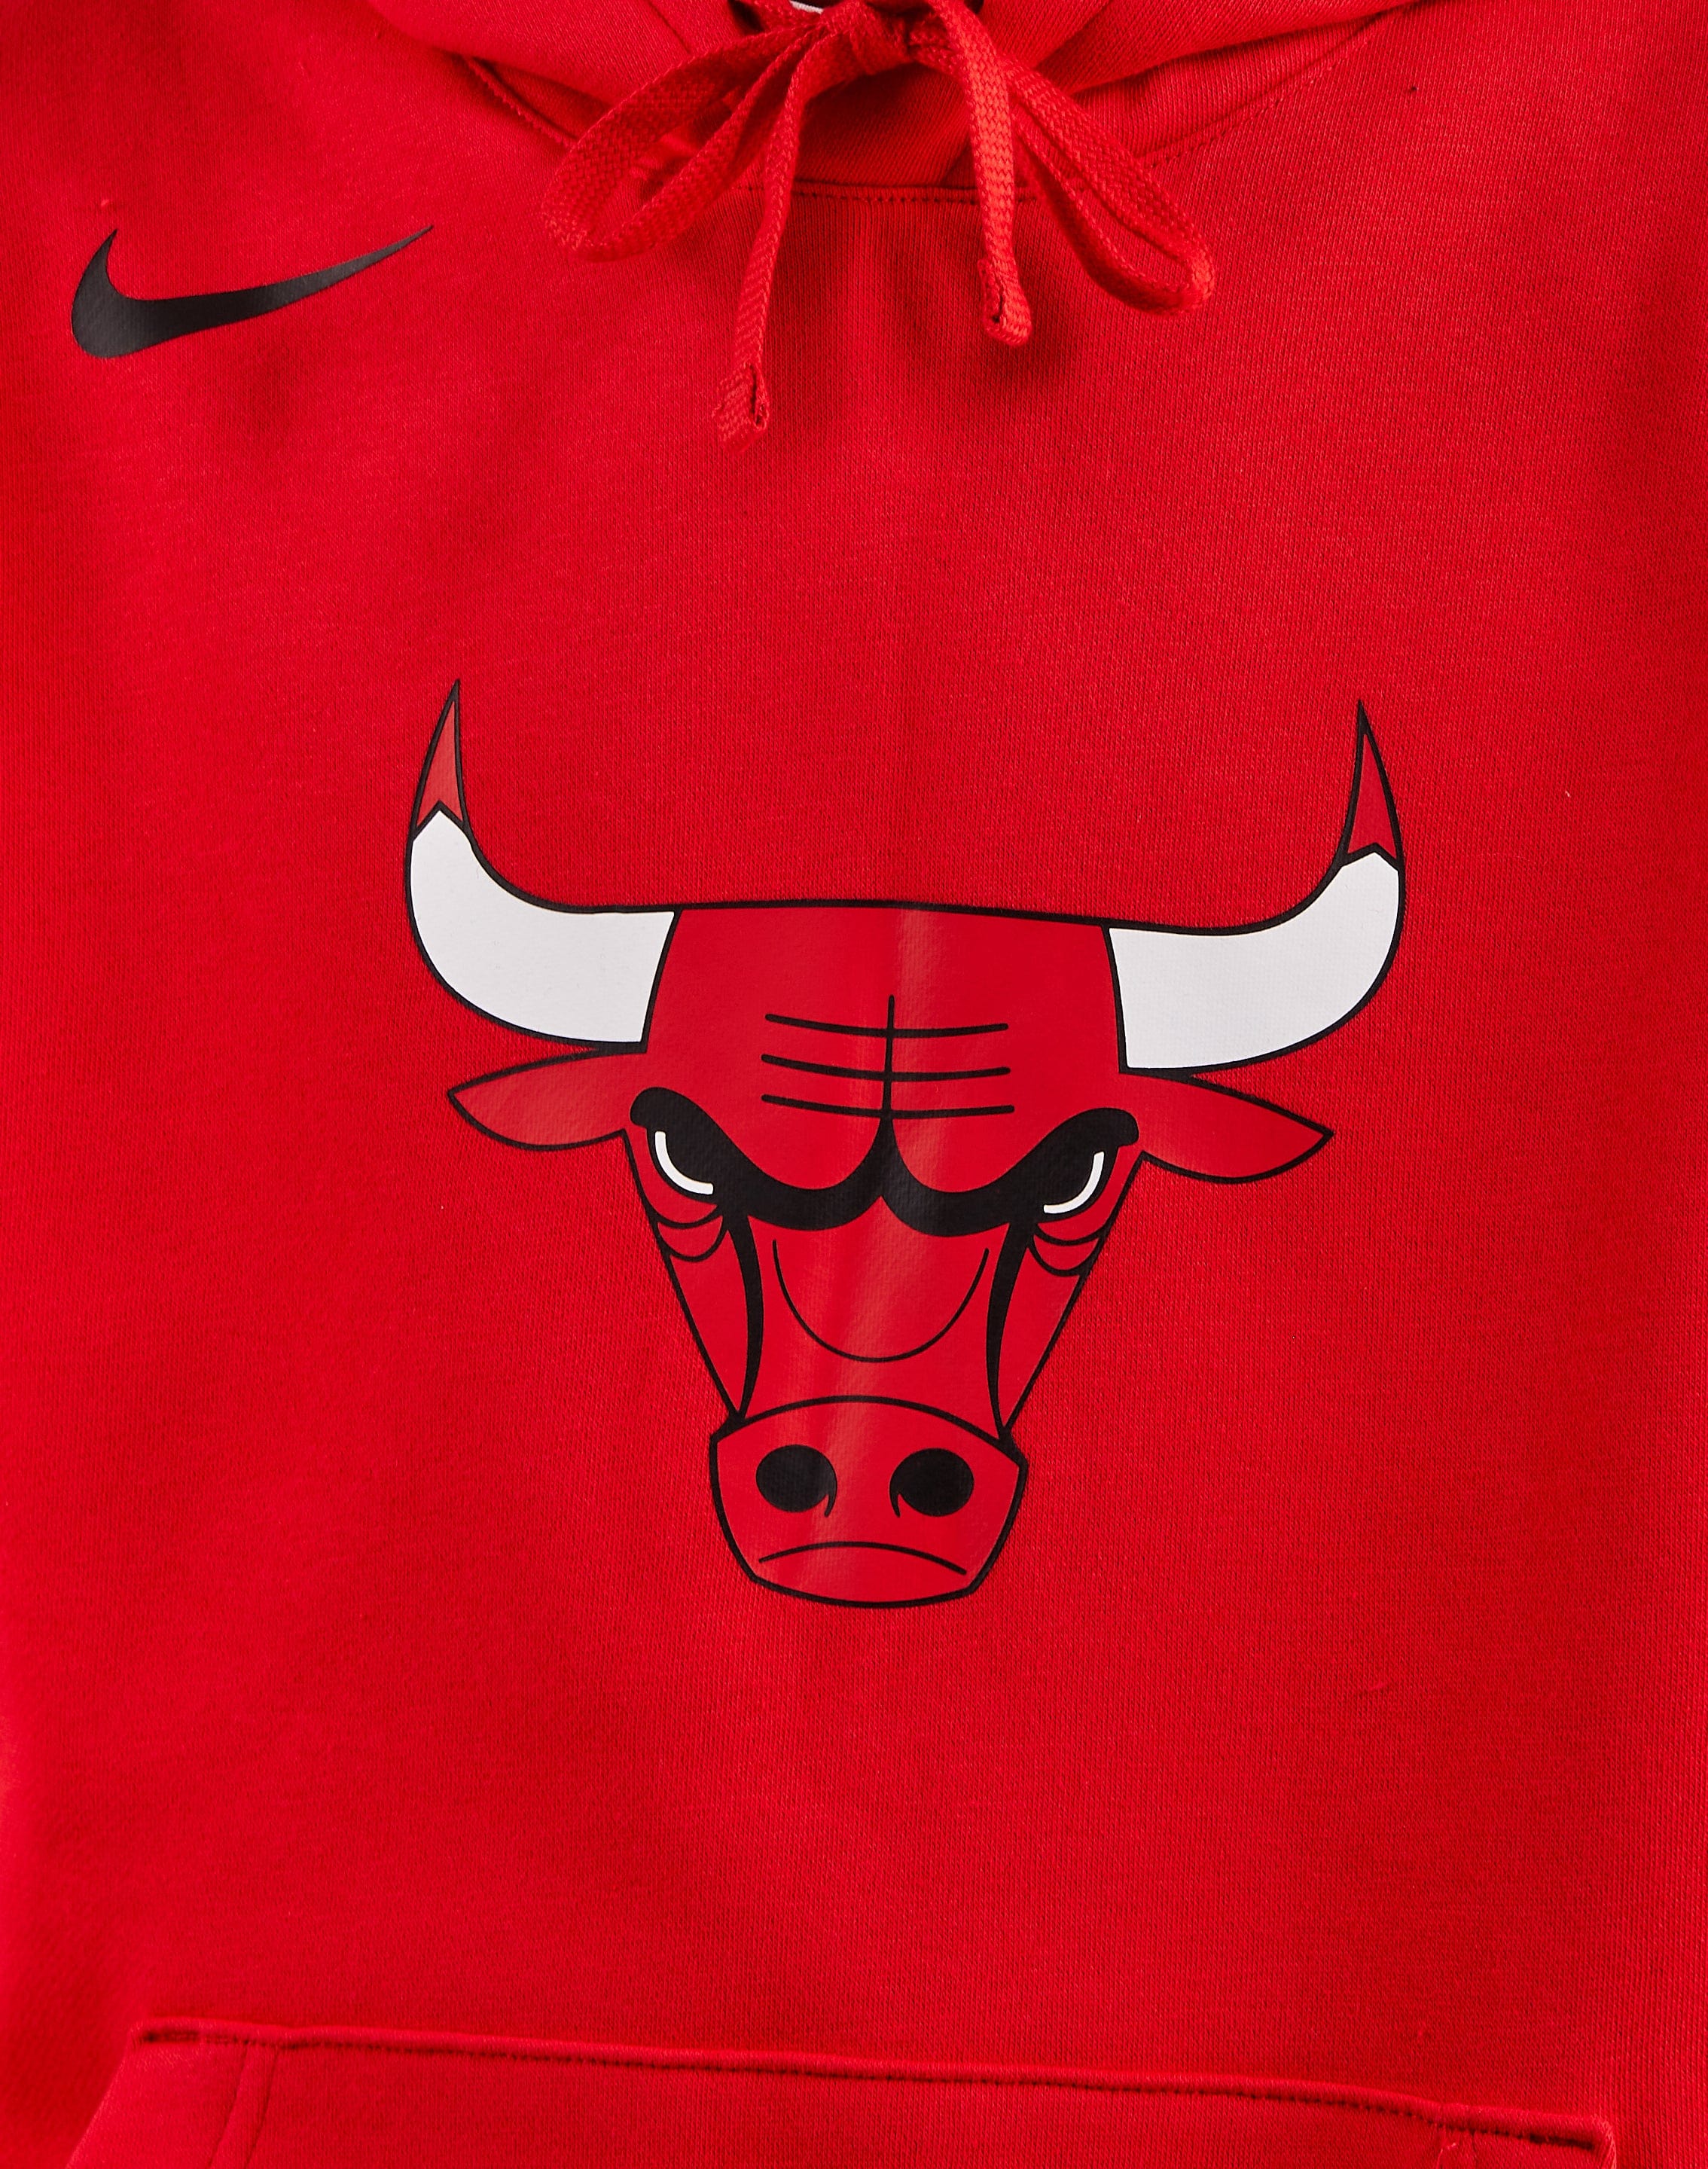 Nike NBA Chicago Bulls Pullover Hoodie Red Men's - US